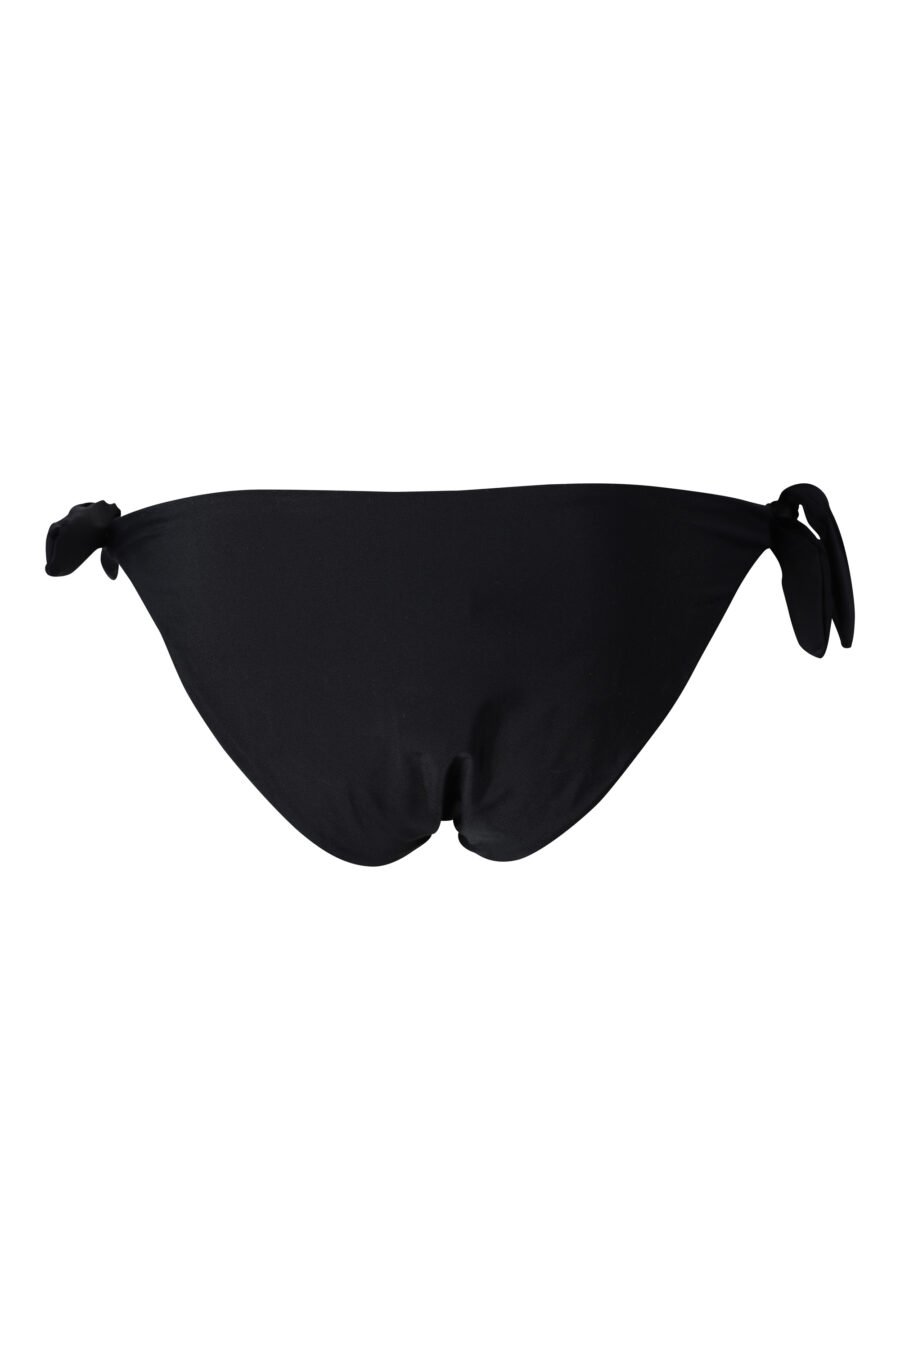 Bas de bikini noir avec haut de bikini maxi "imprimé animal" et lien latéral - IMG 2312